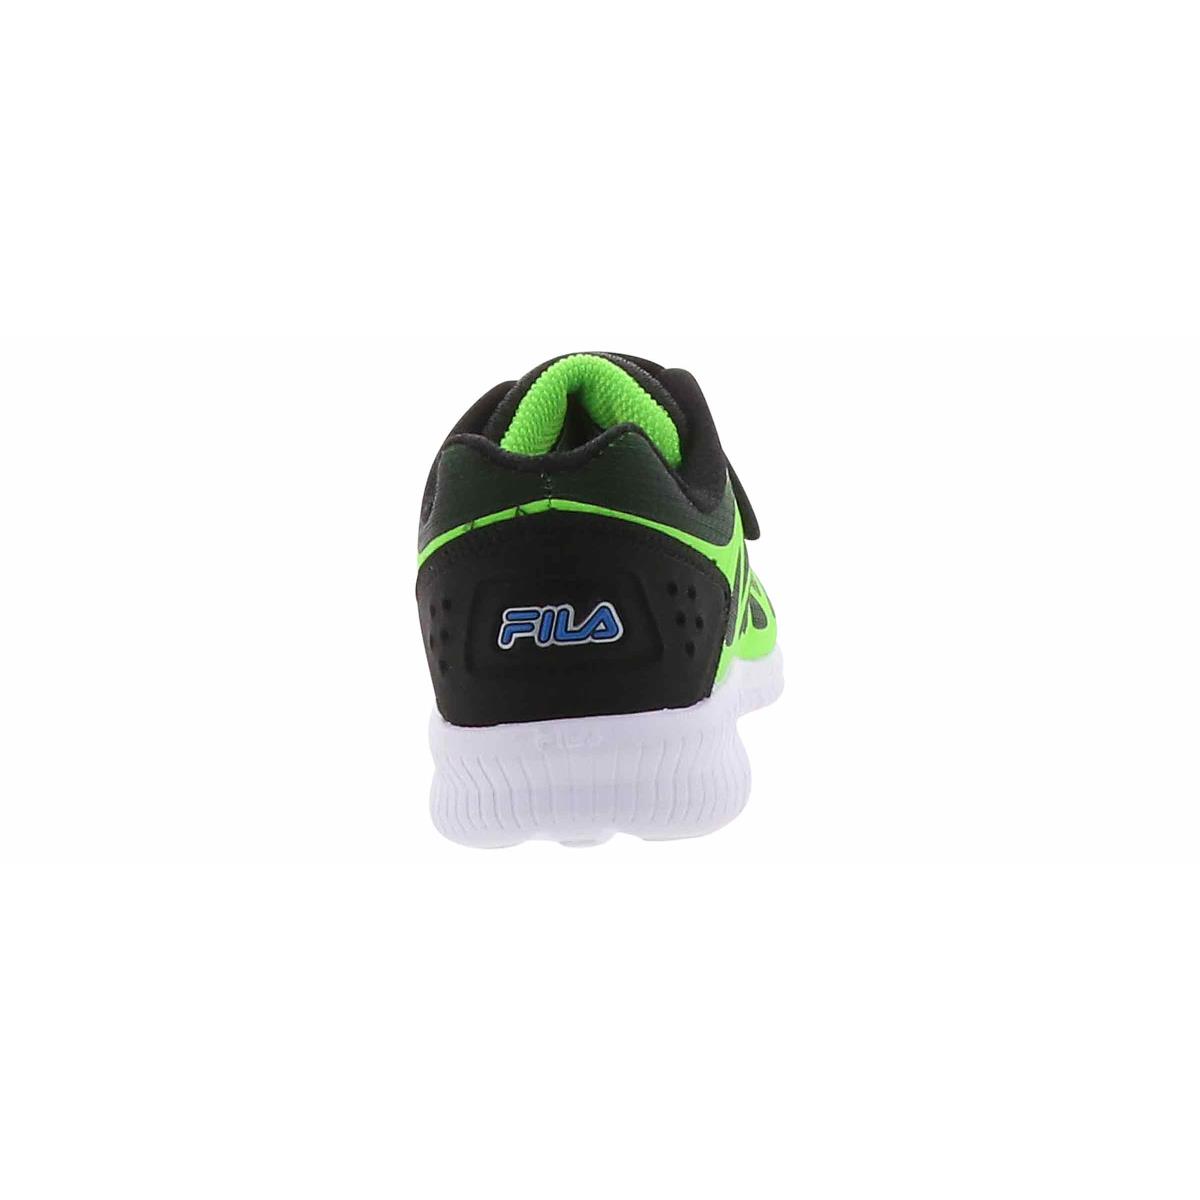 Fila shoes  - Green 2